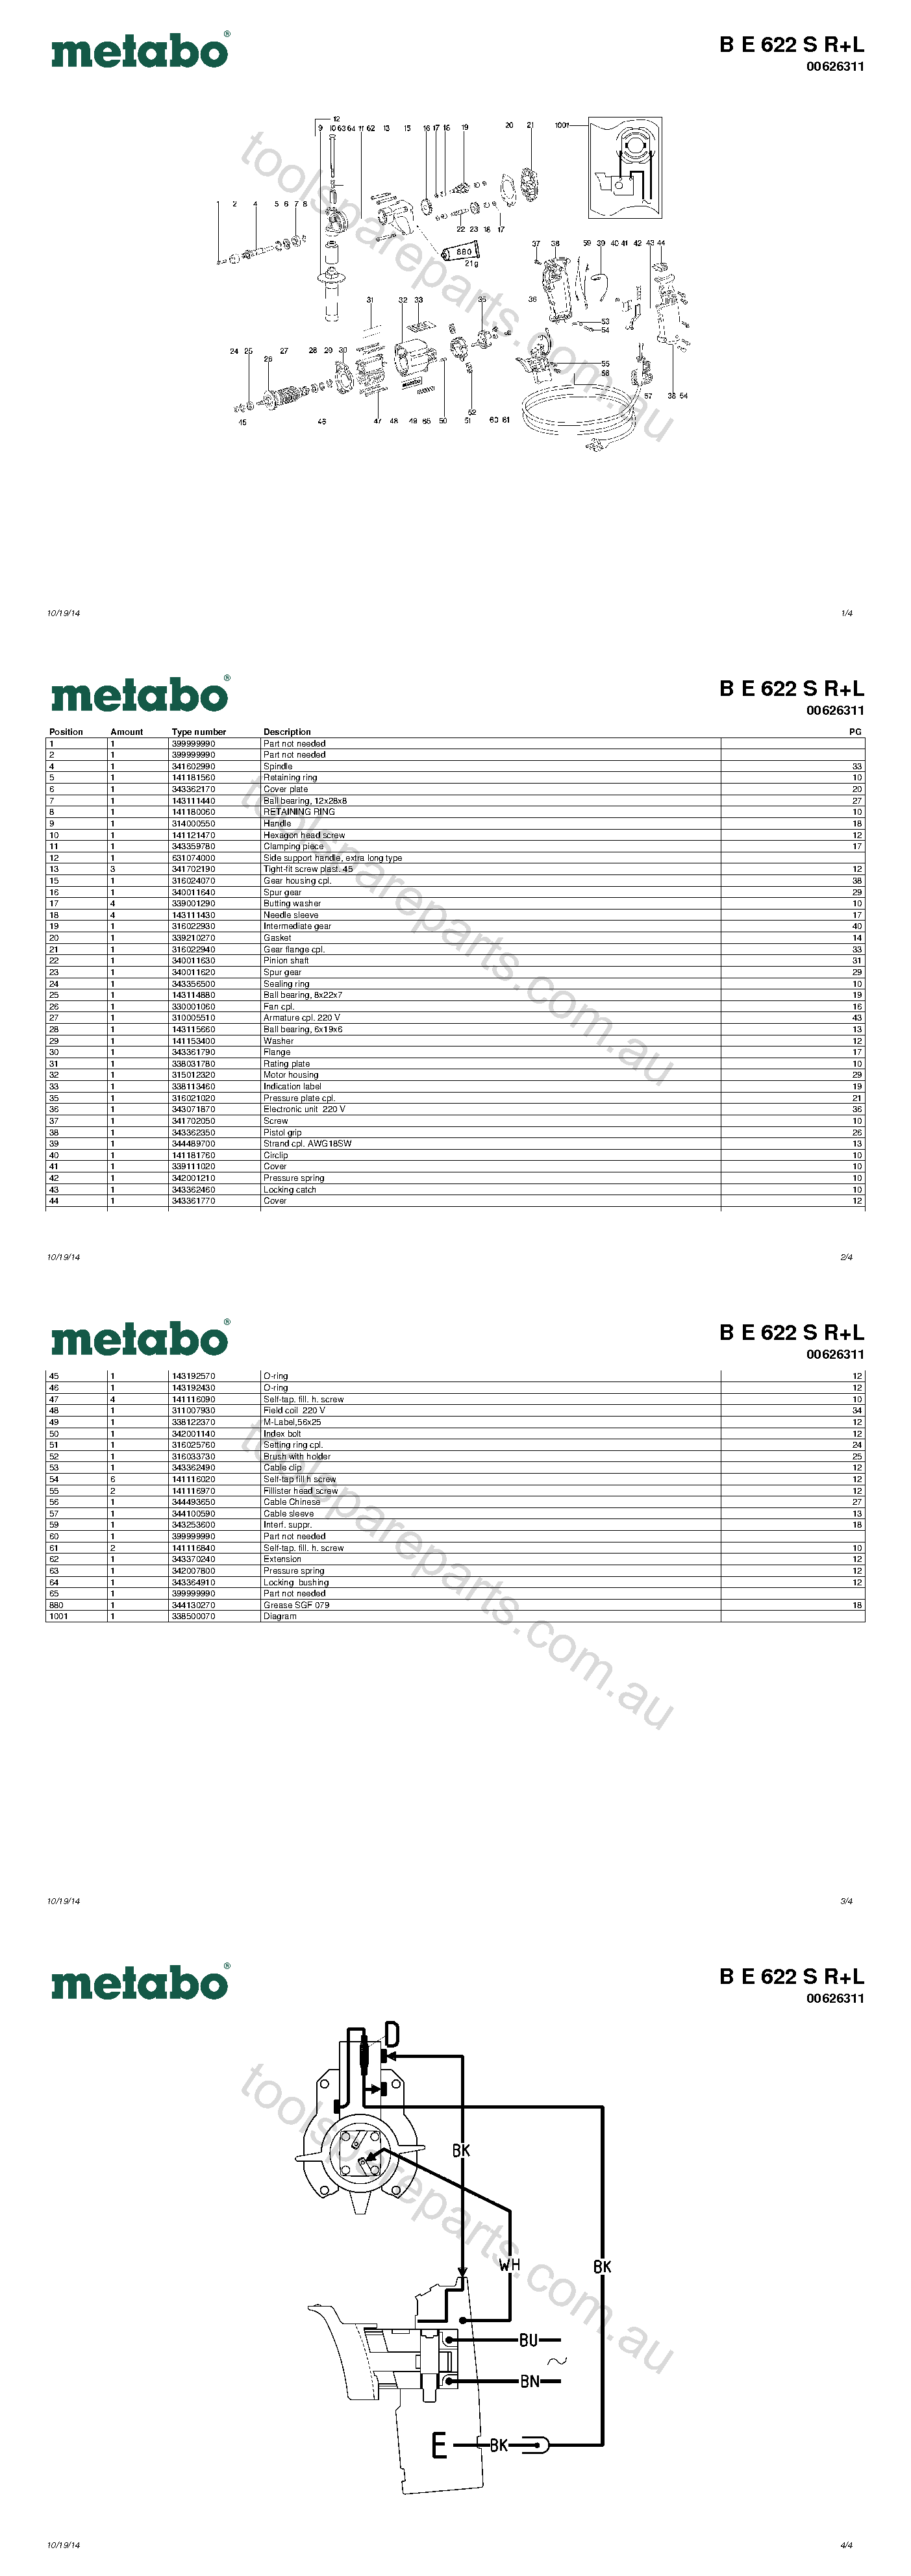 Metabo B E 622 S R+L 00626311  Diagram 1